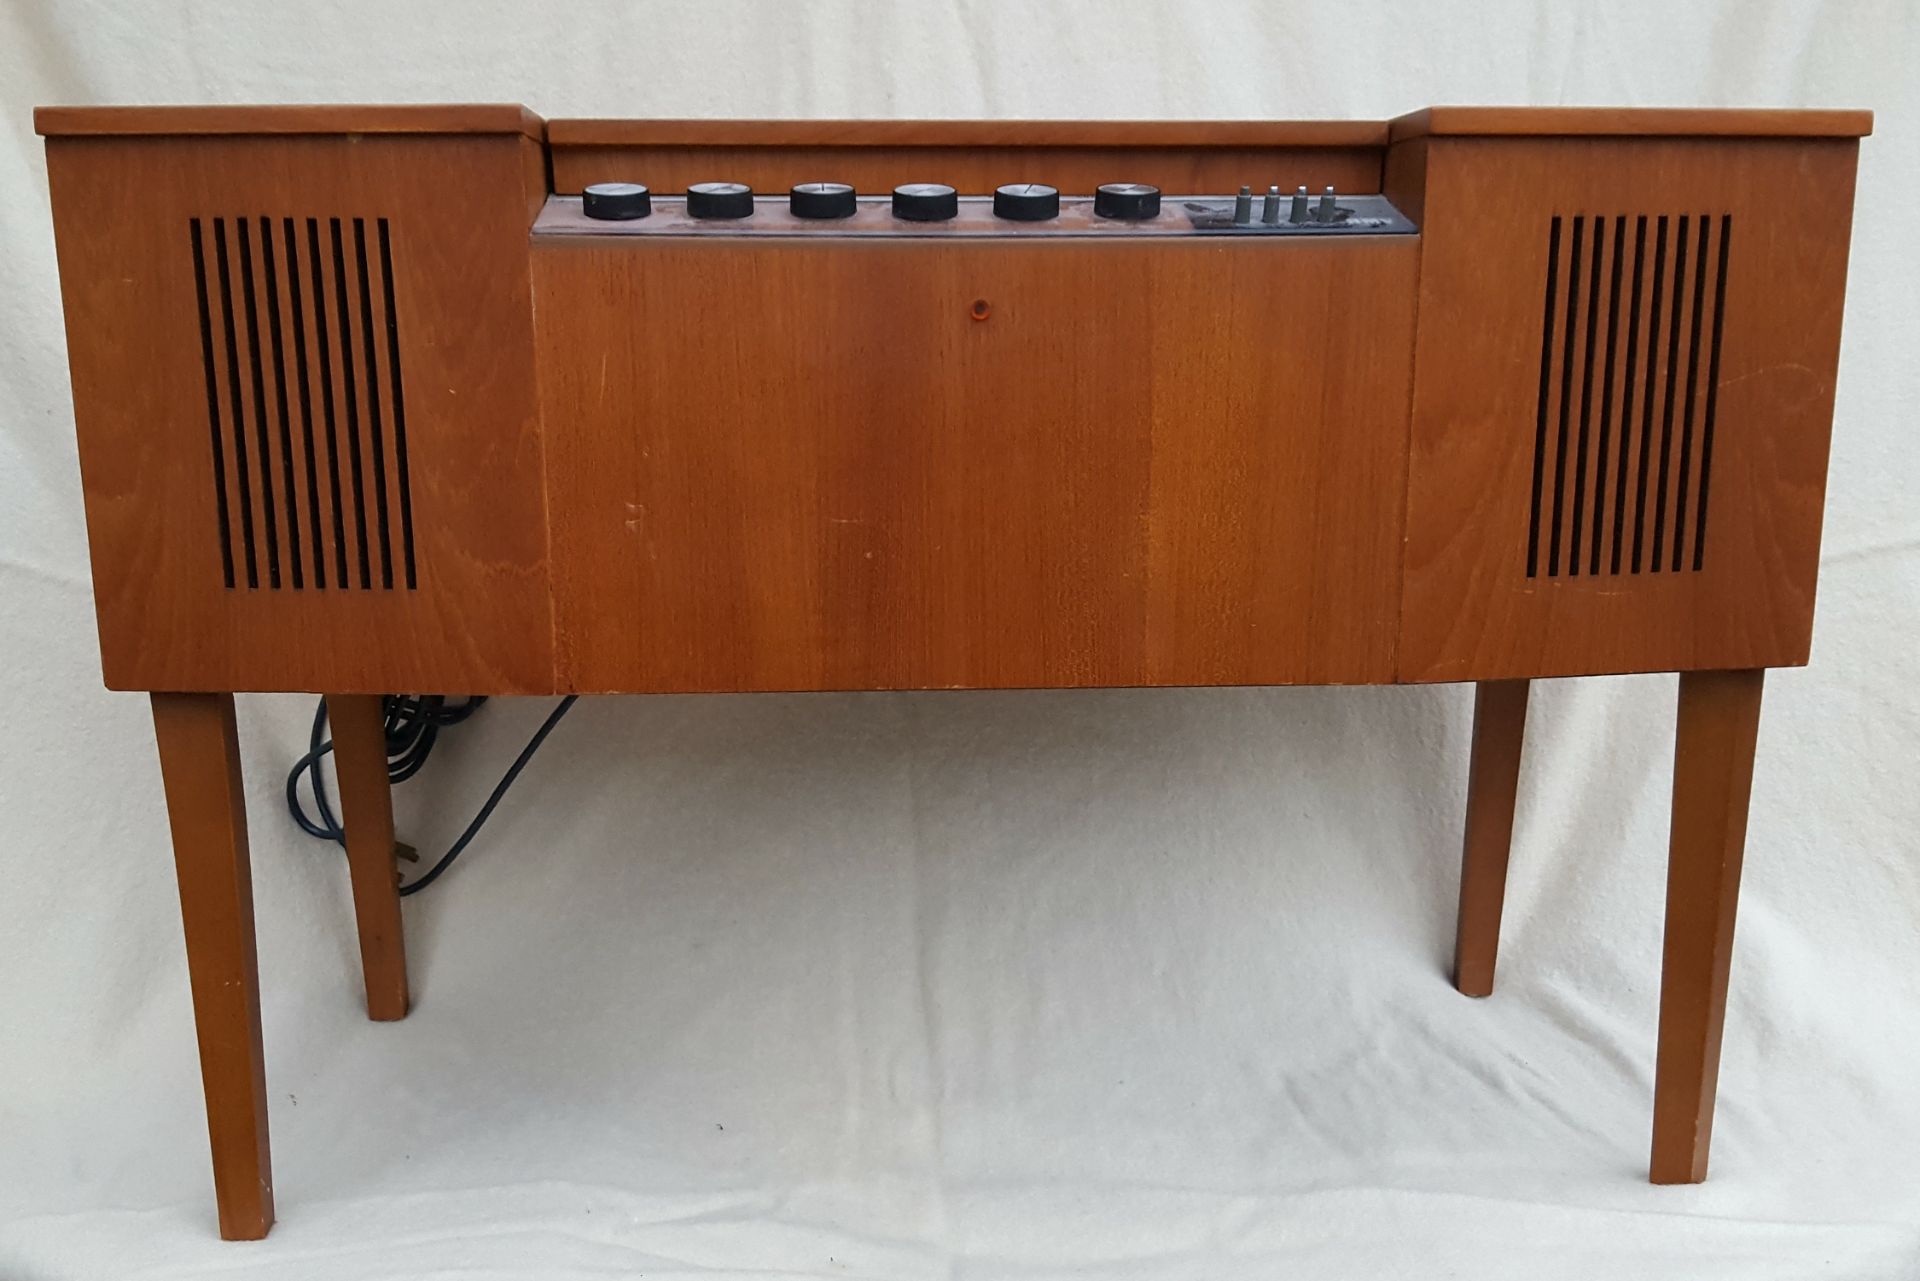 Vintage Retro HMV Stereomaster HiFi Unit & Record Player c1950's